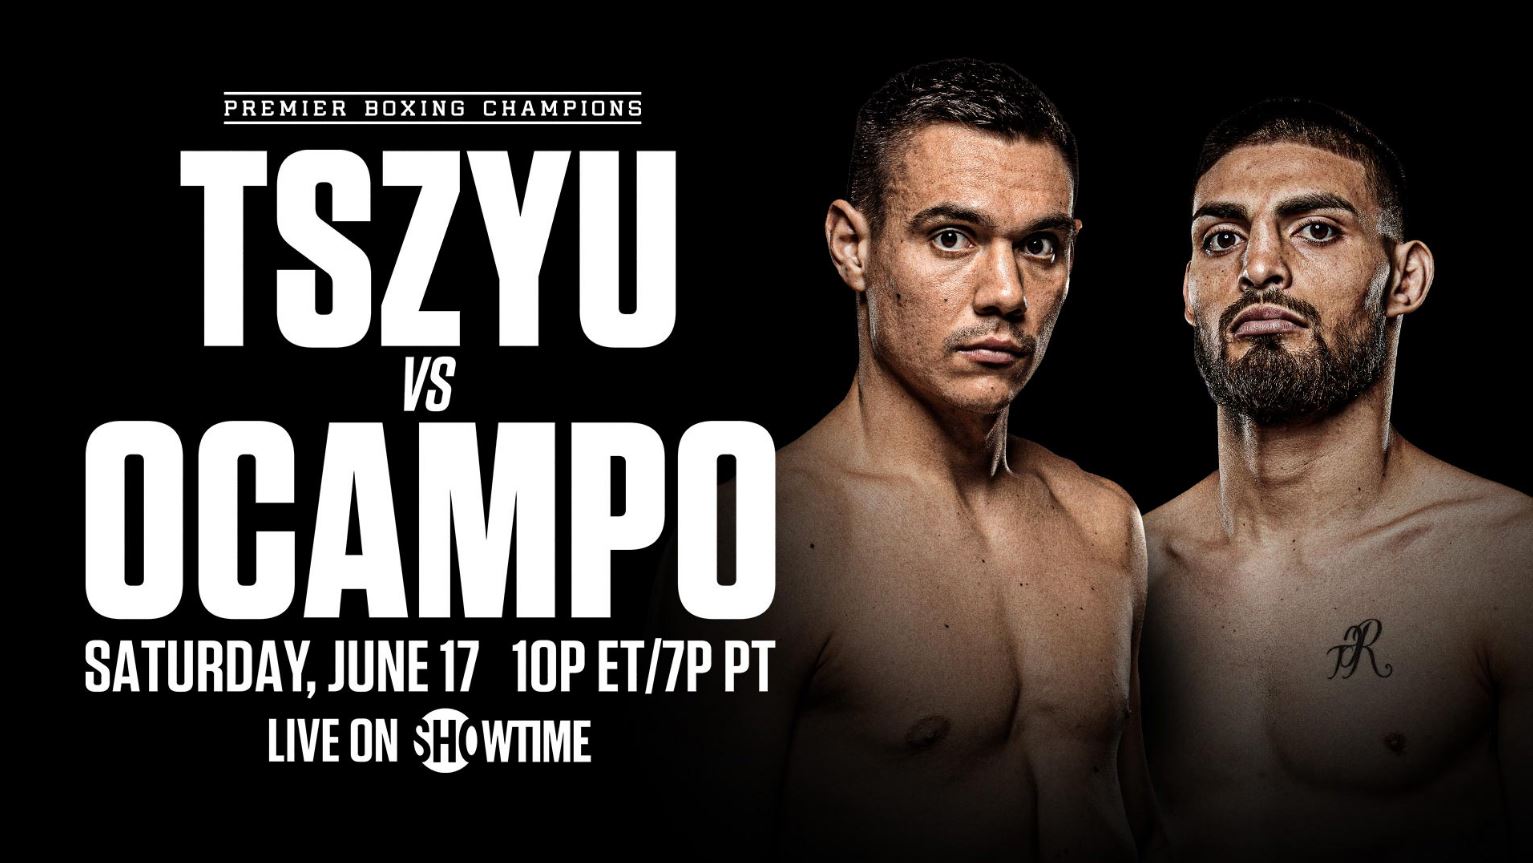 Tszyu vs Ocampo live stream How to watch the boxing match Digital Trends